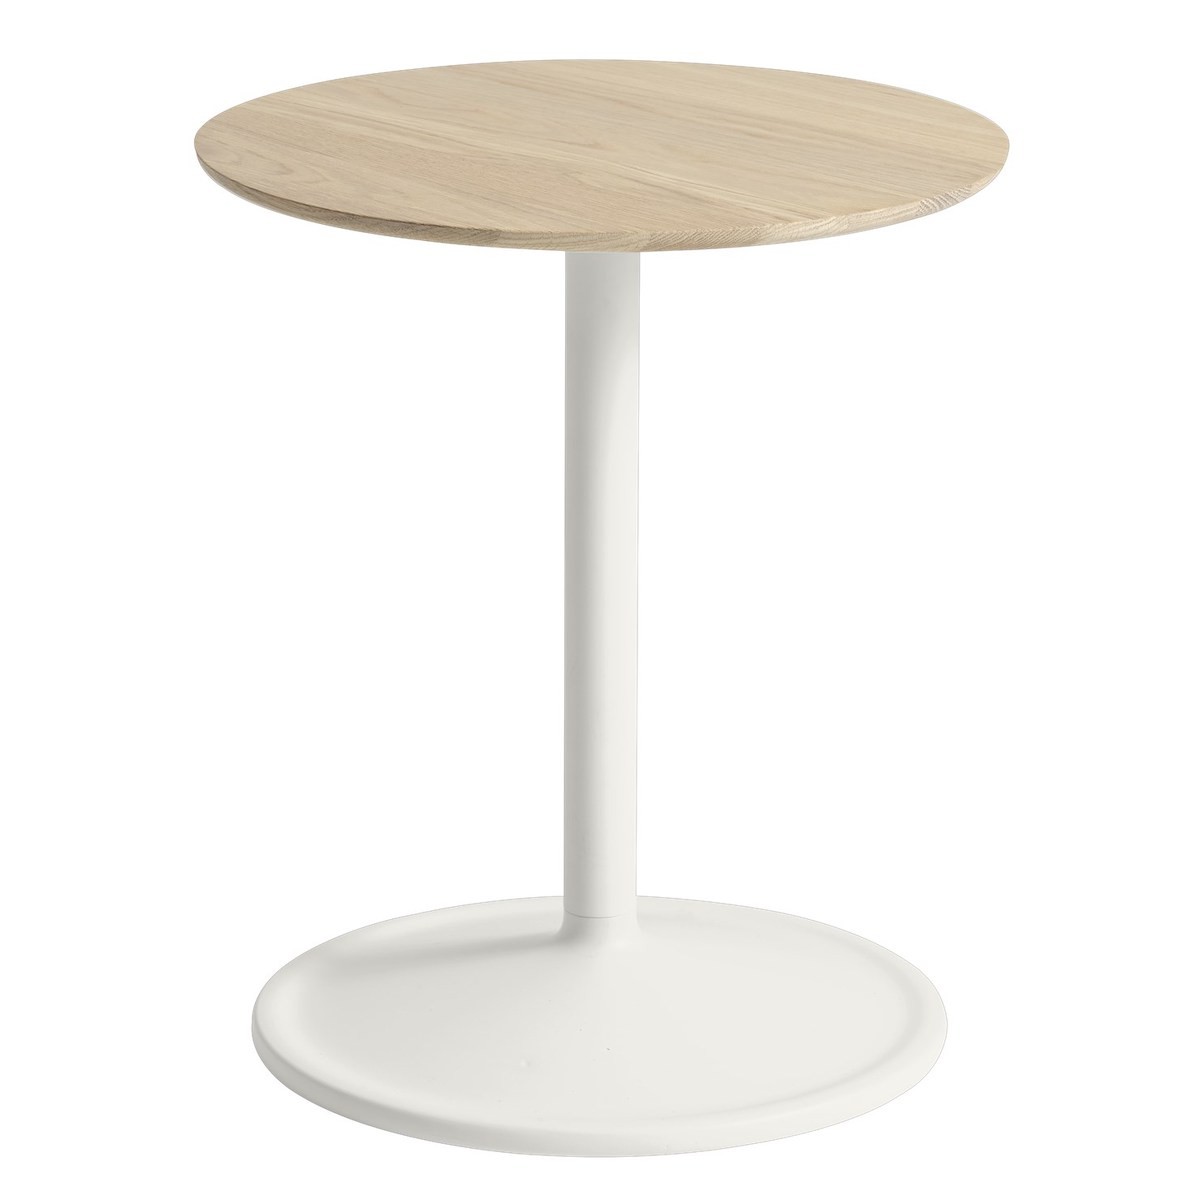 Off white + oak - Ø41cm, H48cm - Soft side table